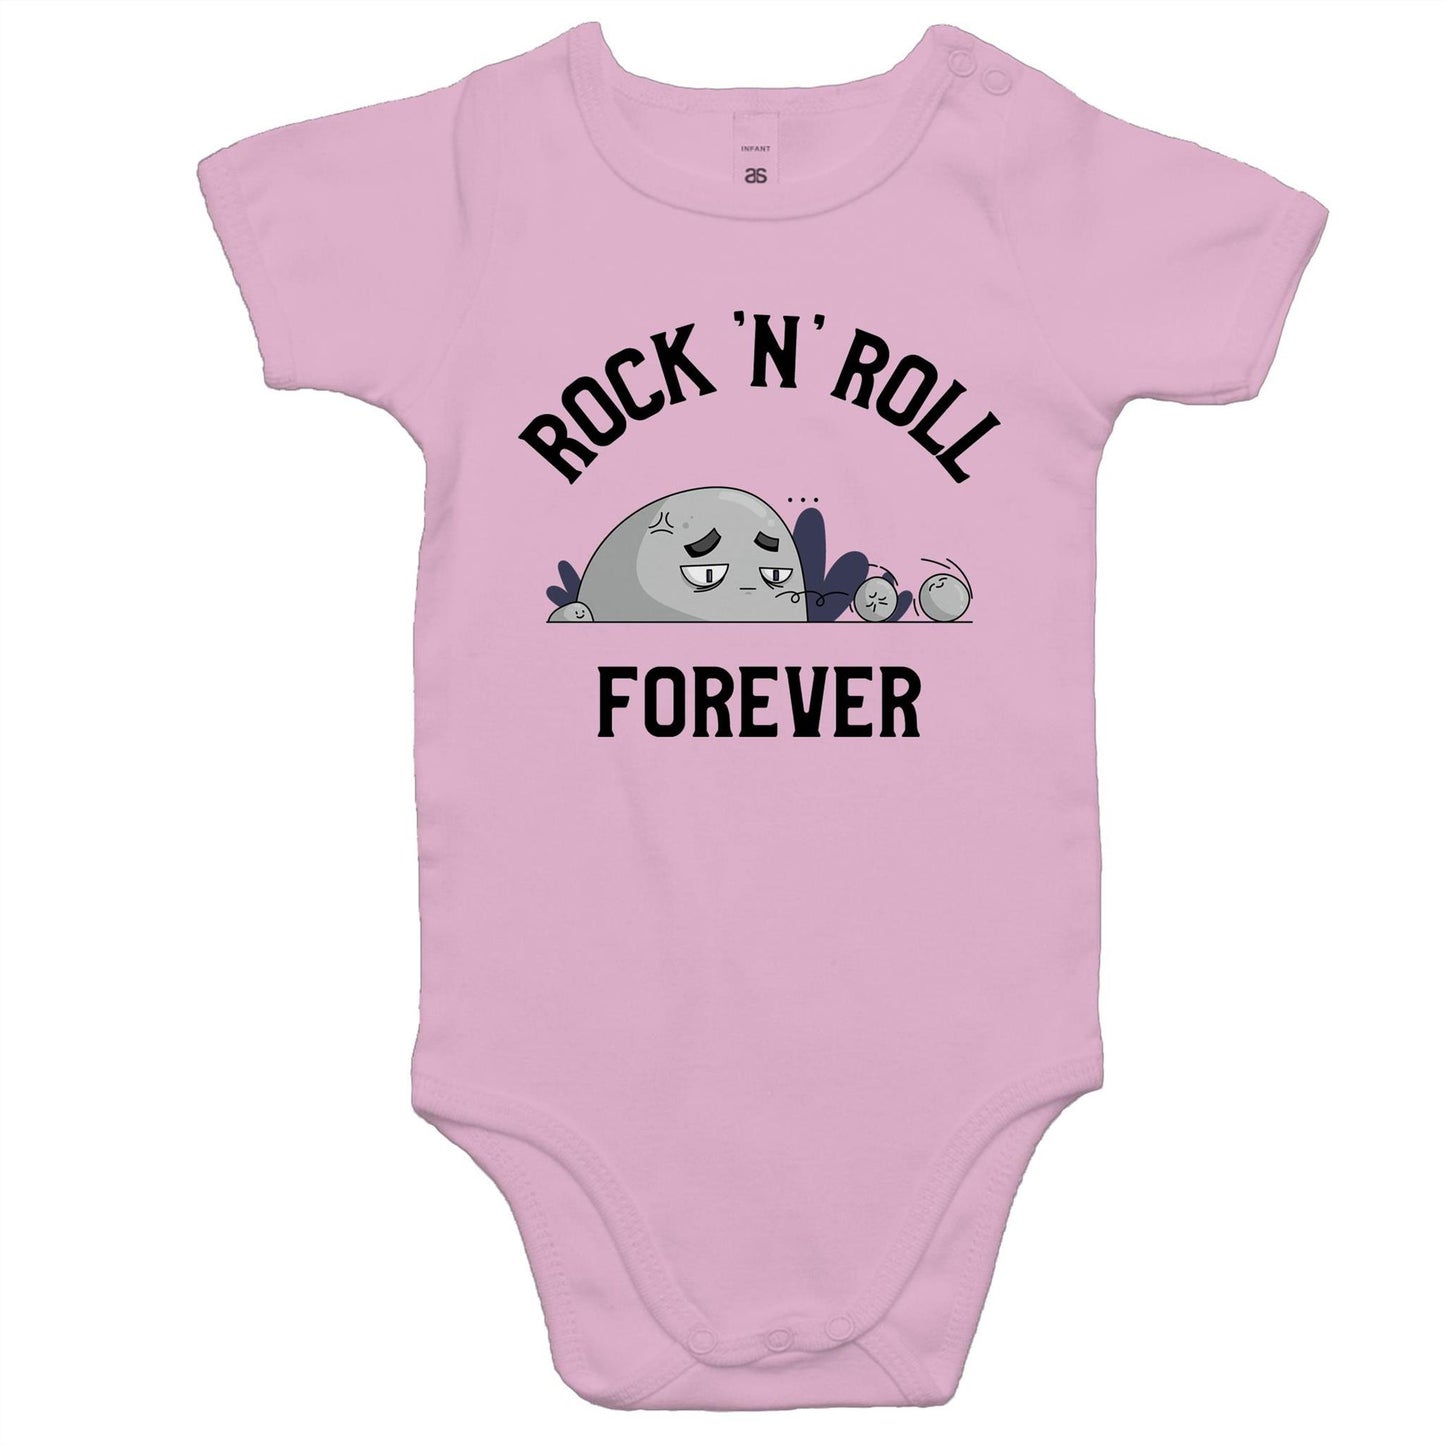 Rock 'N' Roll Forever - Baby Bodysuit Pink Baby Bodysuit Music